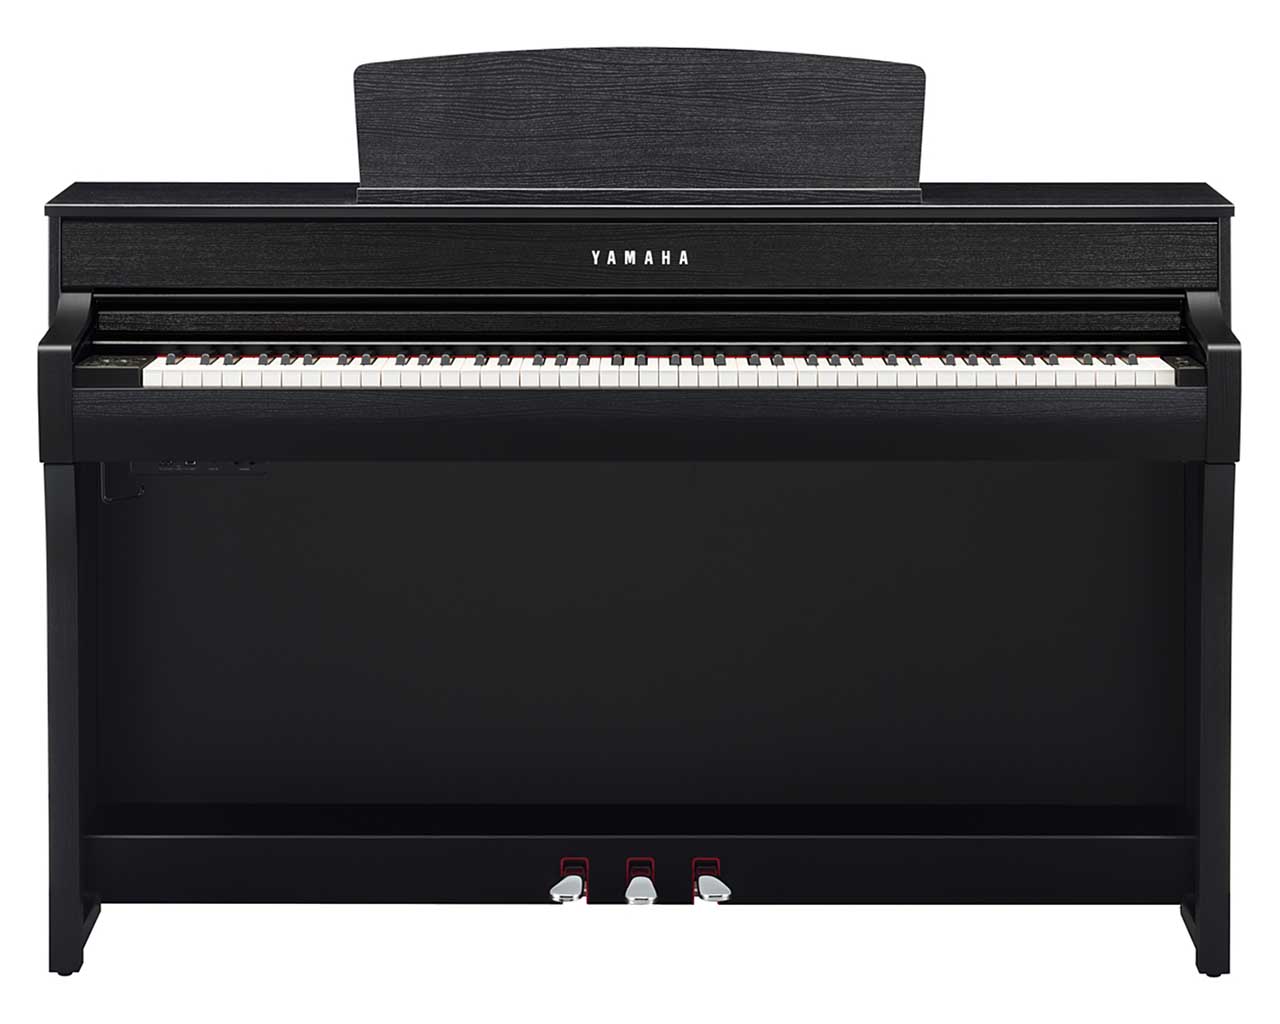 Yamaha-Clavinova-CLP-745-B-Digitalpiano-schwarz-Front-Pianohaus-Filipski